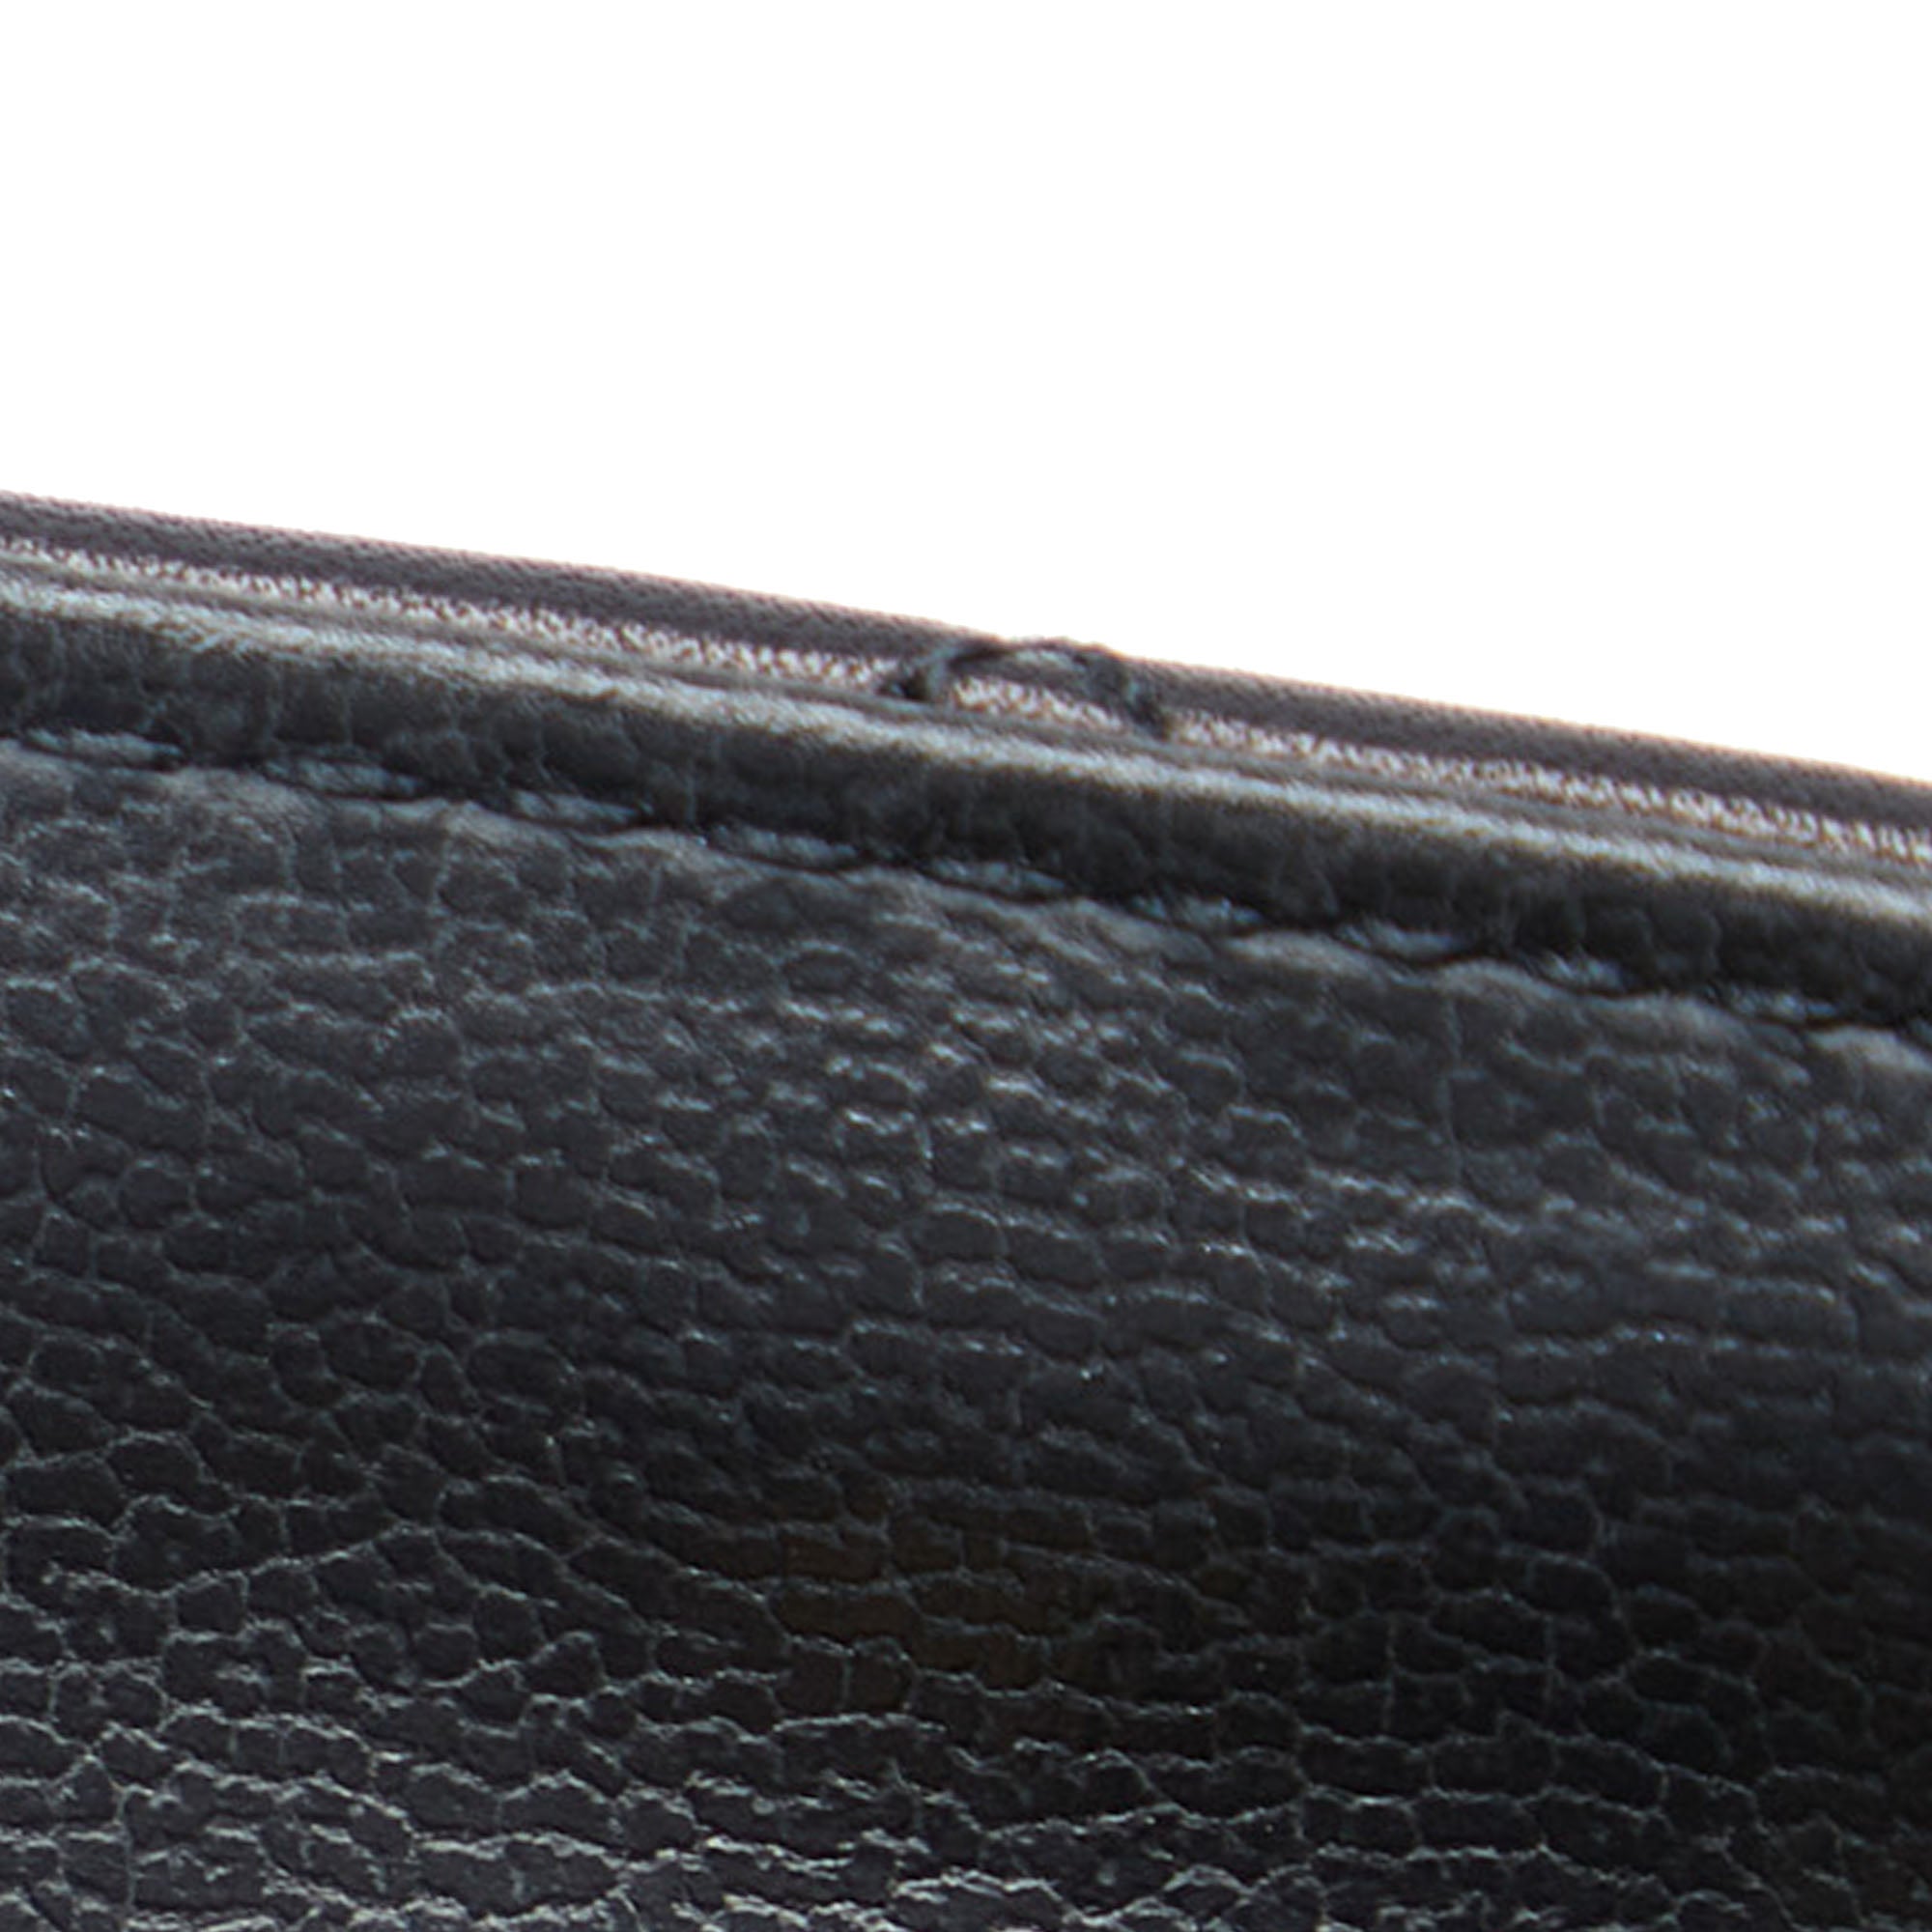 Black Chanel CC Matelasse Belt Bag – Designer Revival